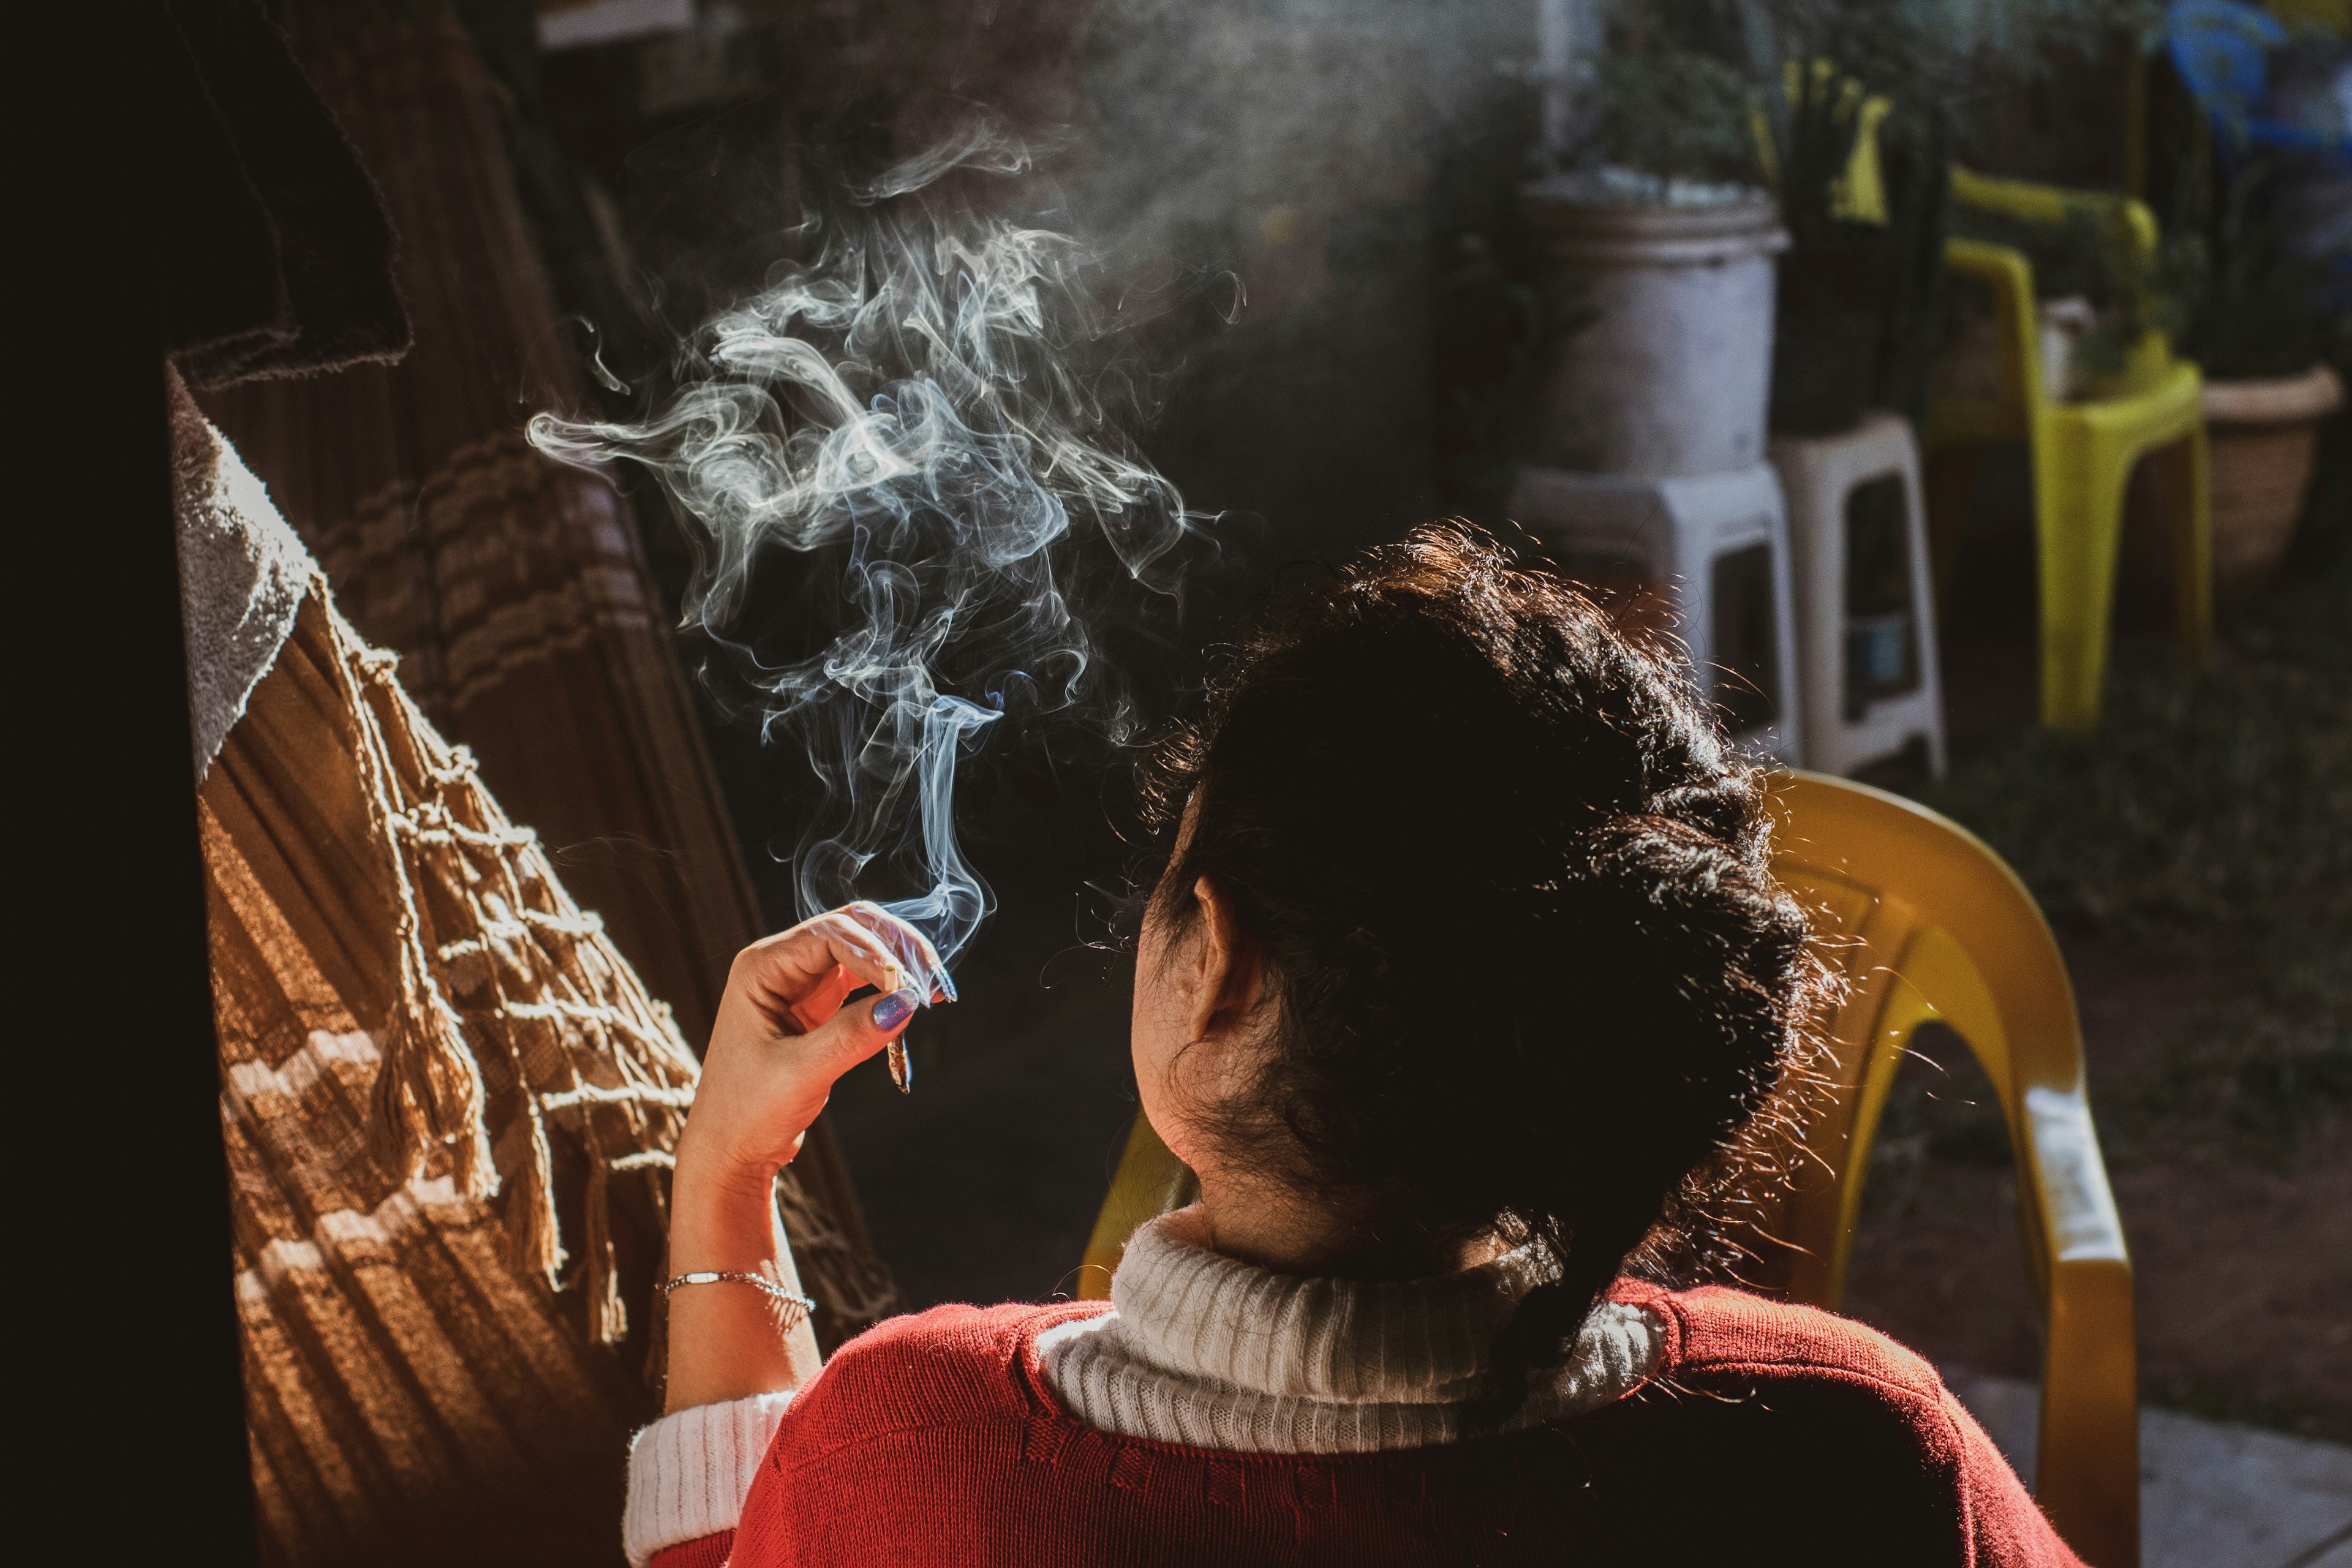 Woman smoking either tobacco or marijuana (weed).